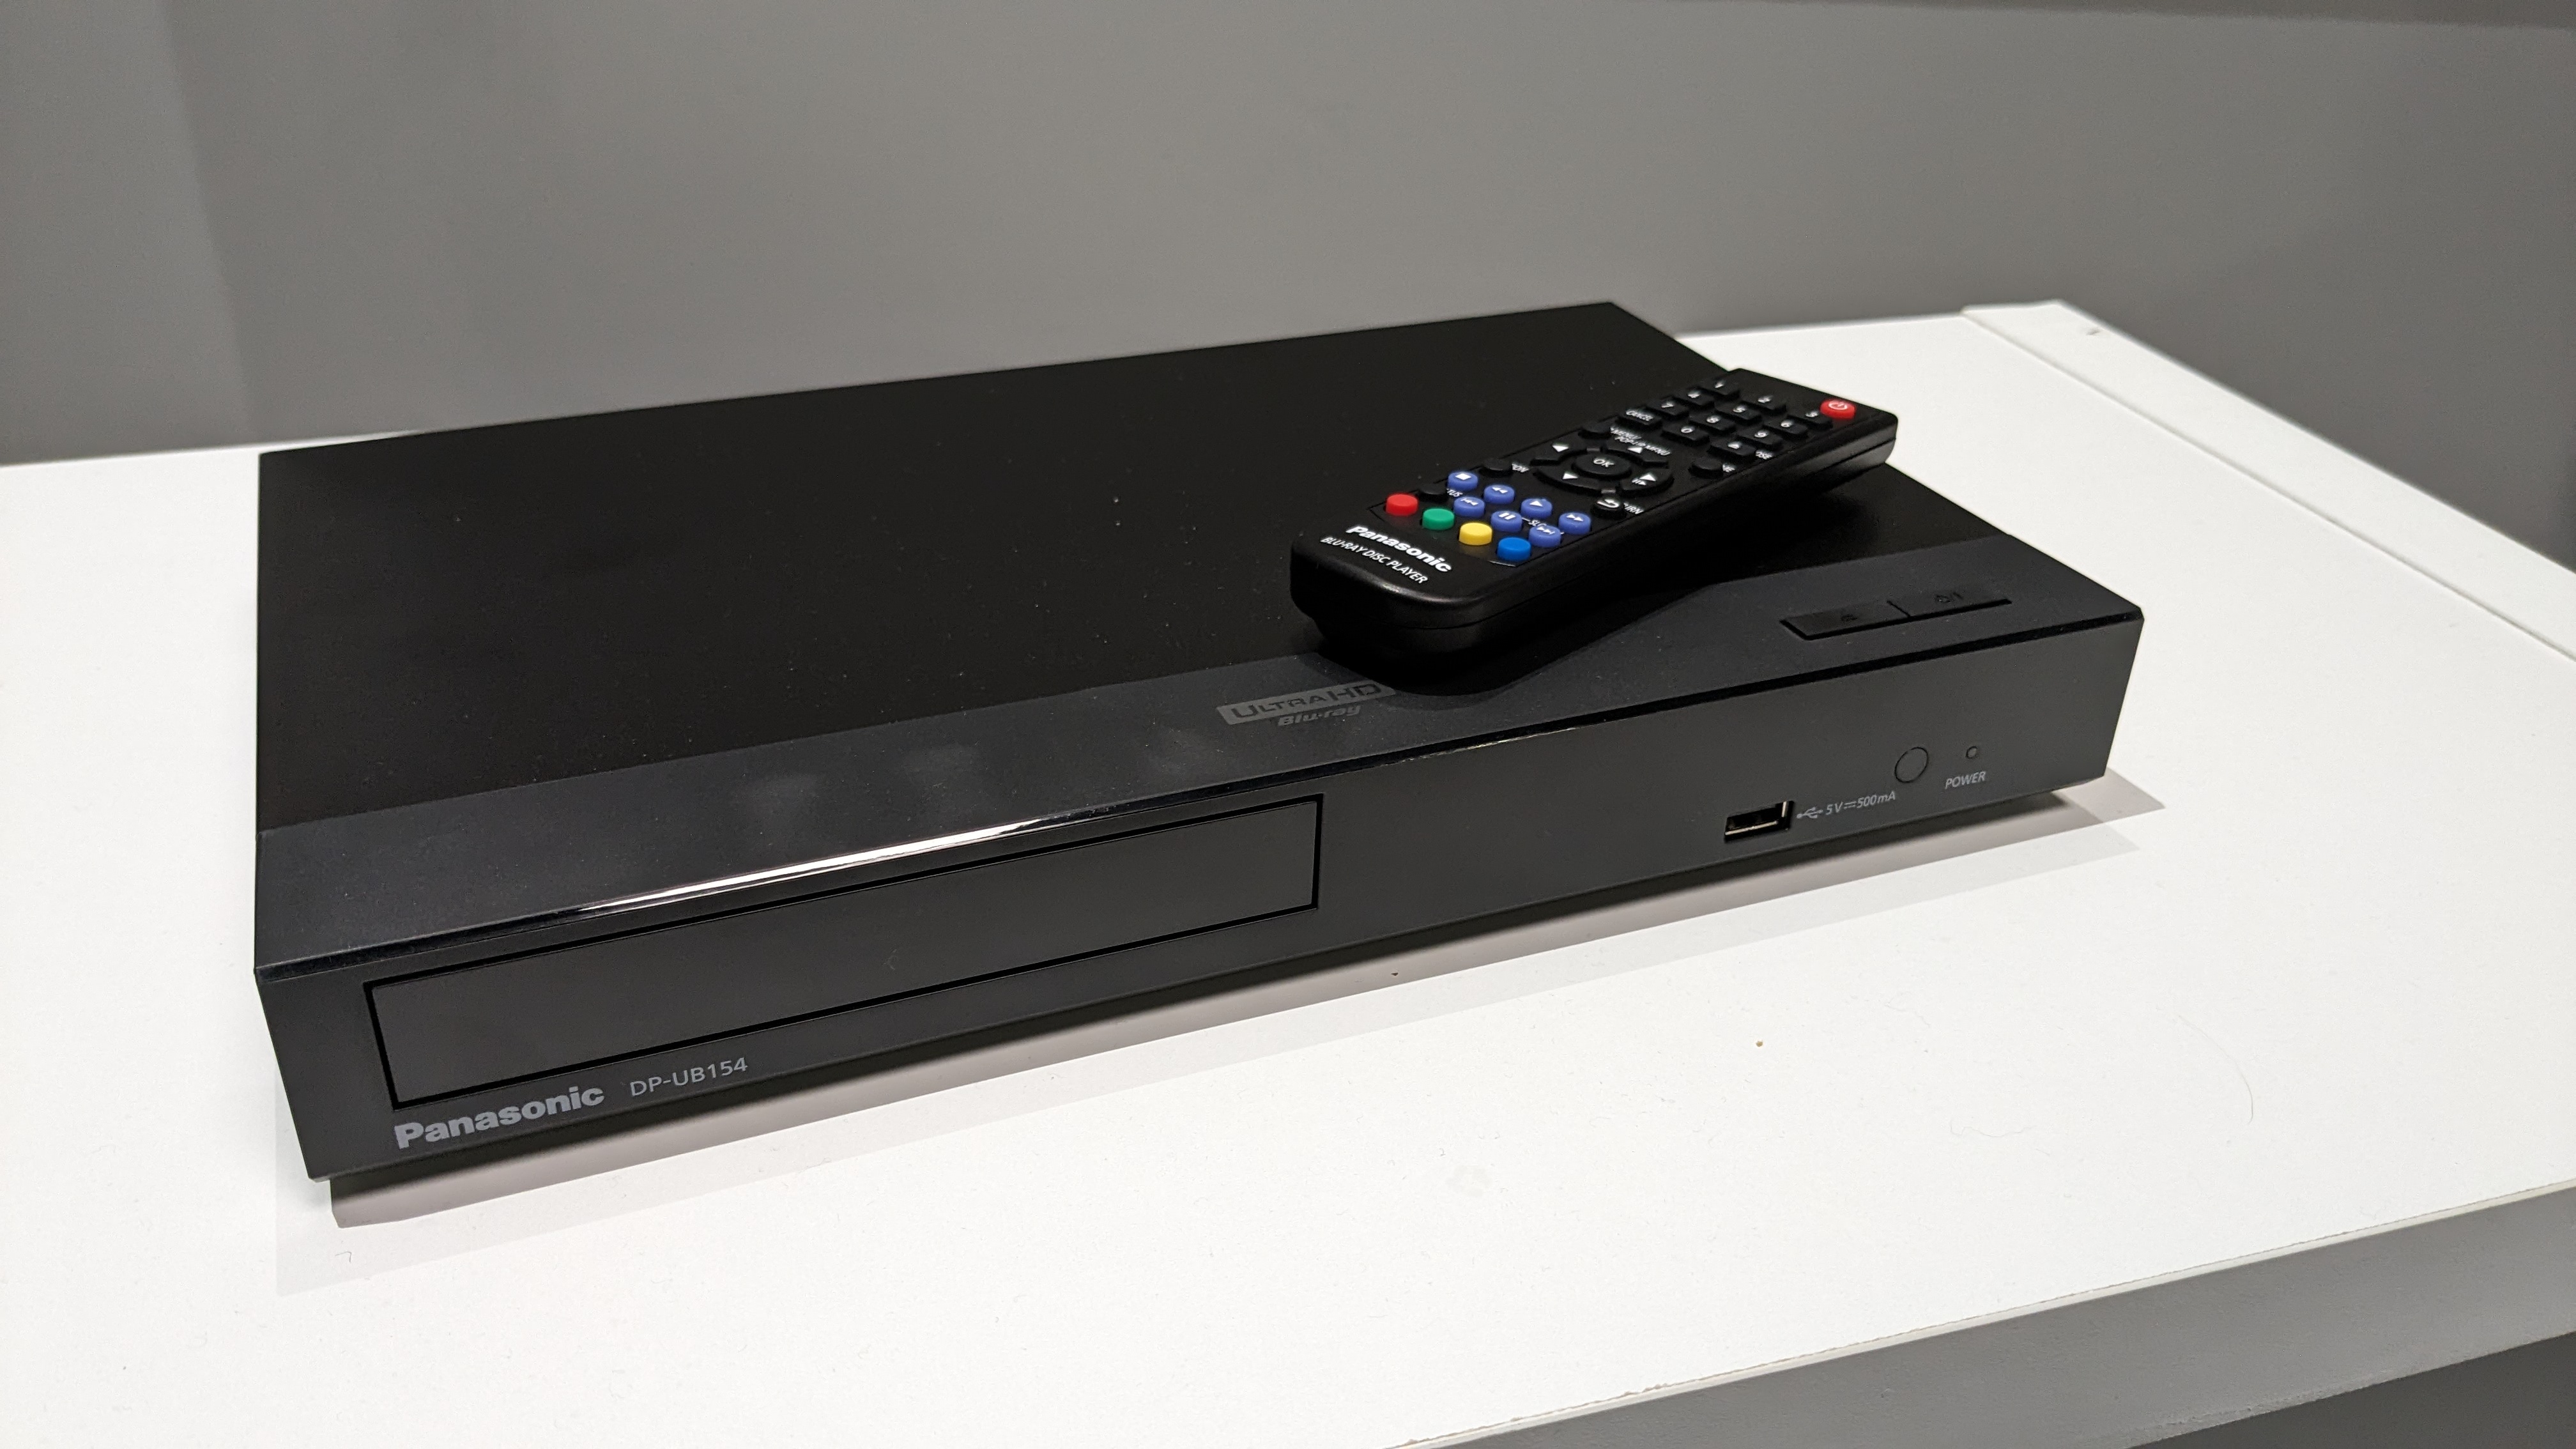 | with TechRadar performance cheap a DP-UB154 4K Panasonic player Blu-ray great review: